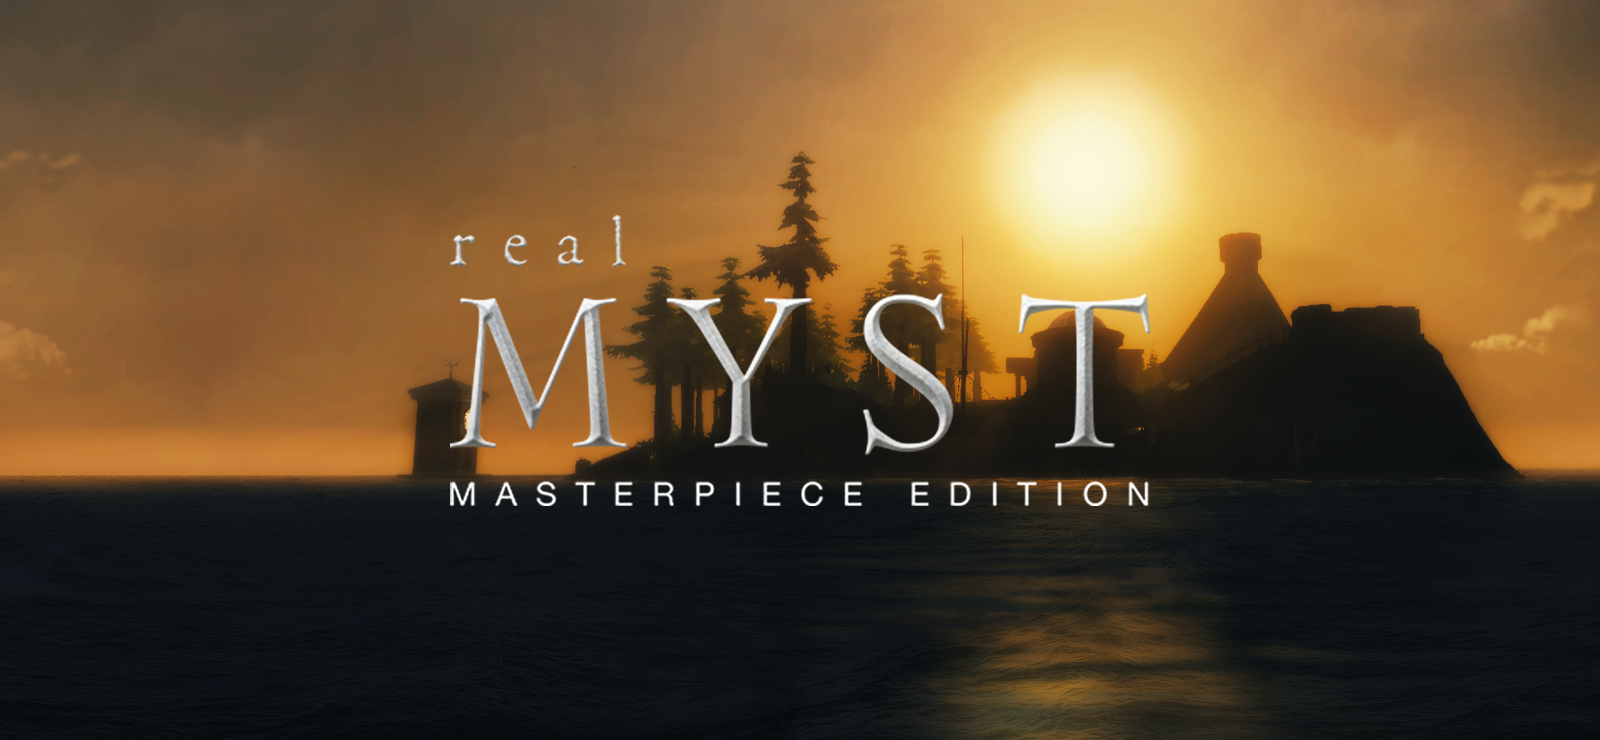 RealMyst: Masterpiece Edition